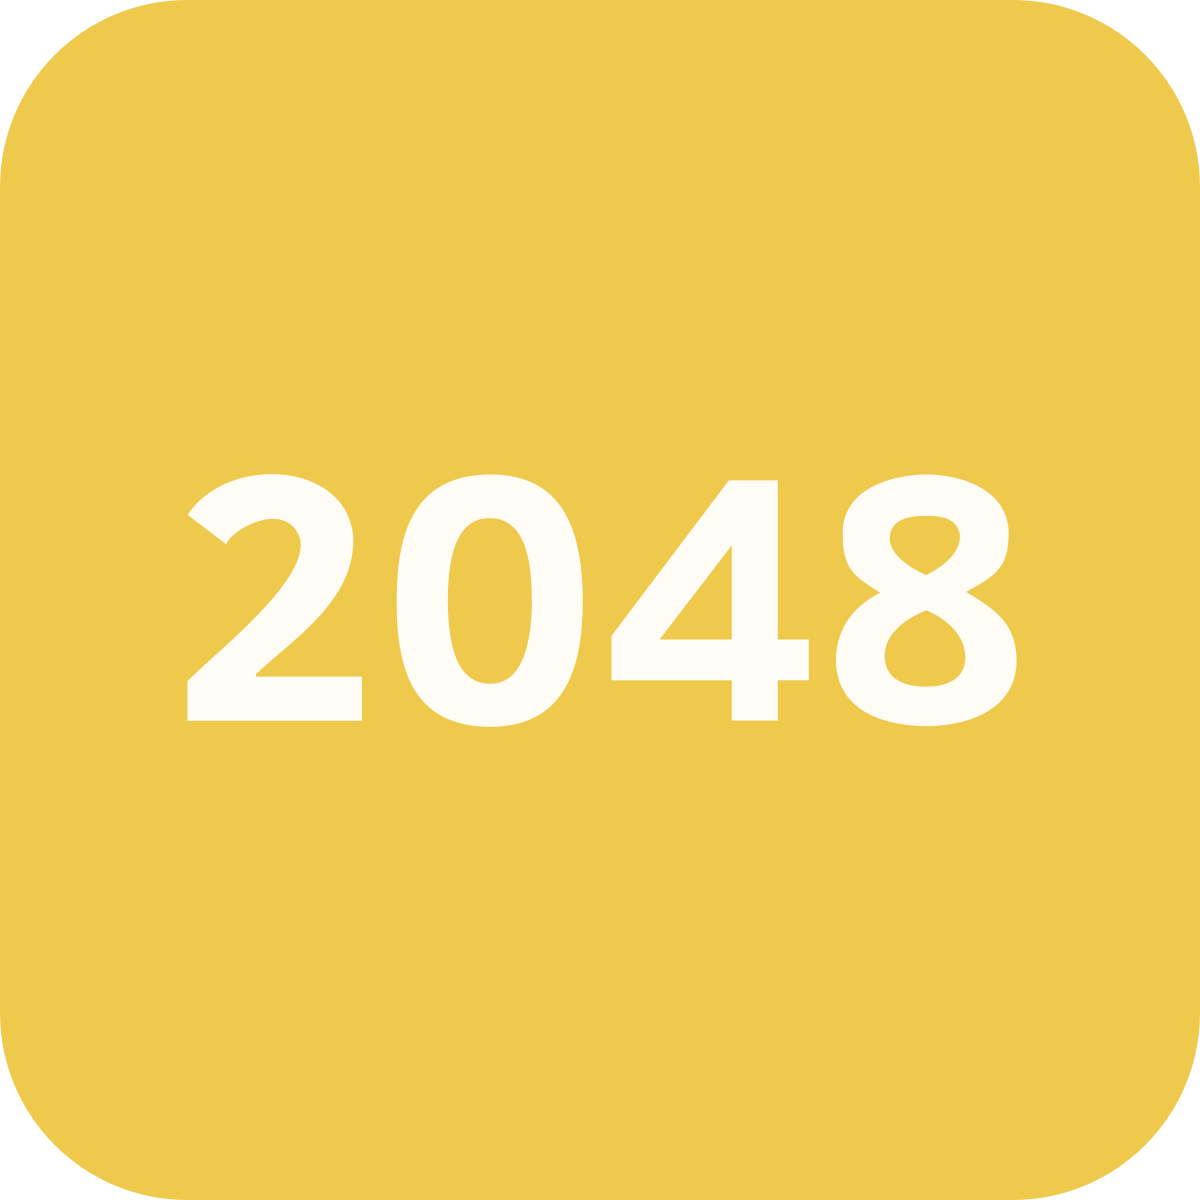 2048 (Video Game) - Wikipedia